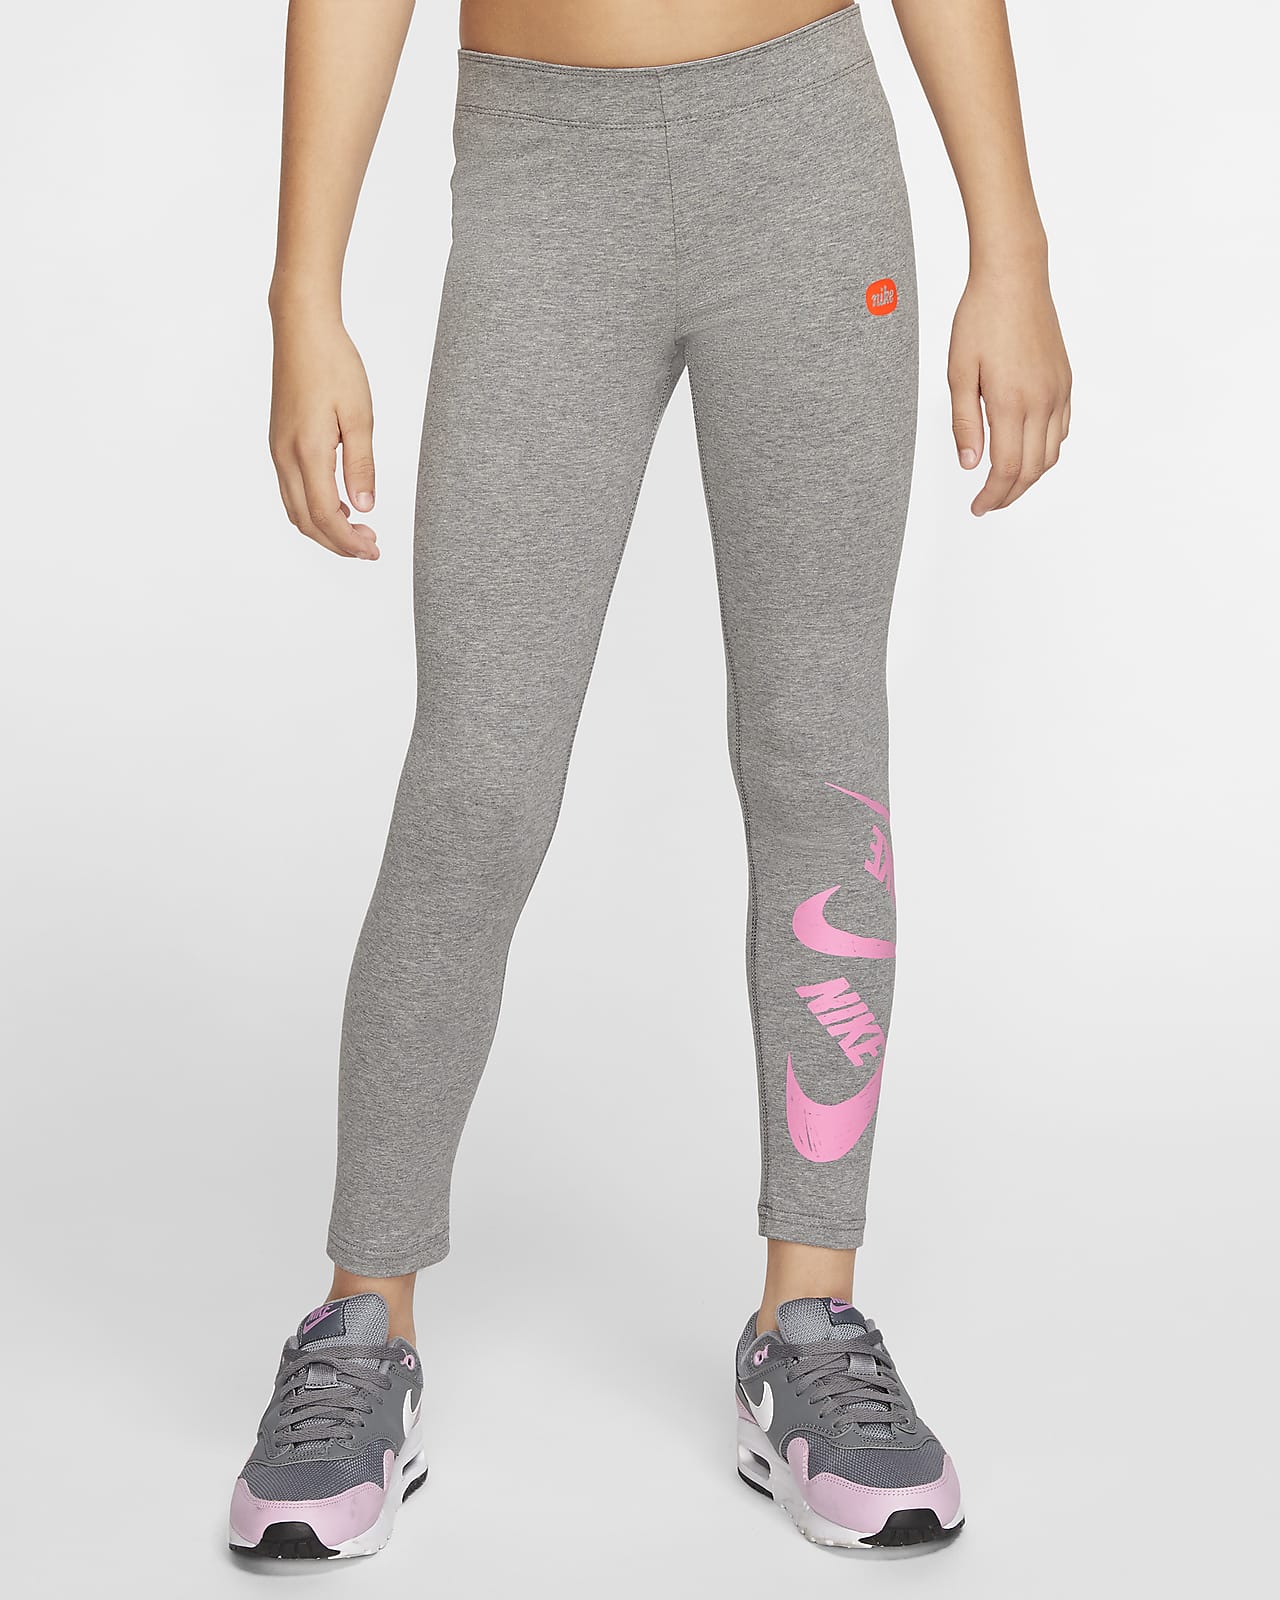 Nike Leggings Youth Girls Large Tight Fit Sportswear Knit Cotton Grey Gold  | eBay